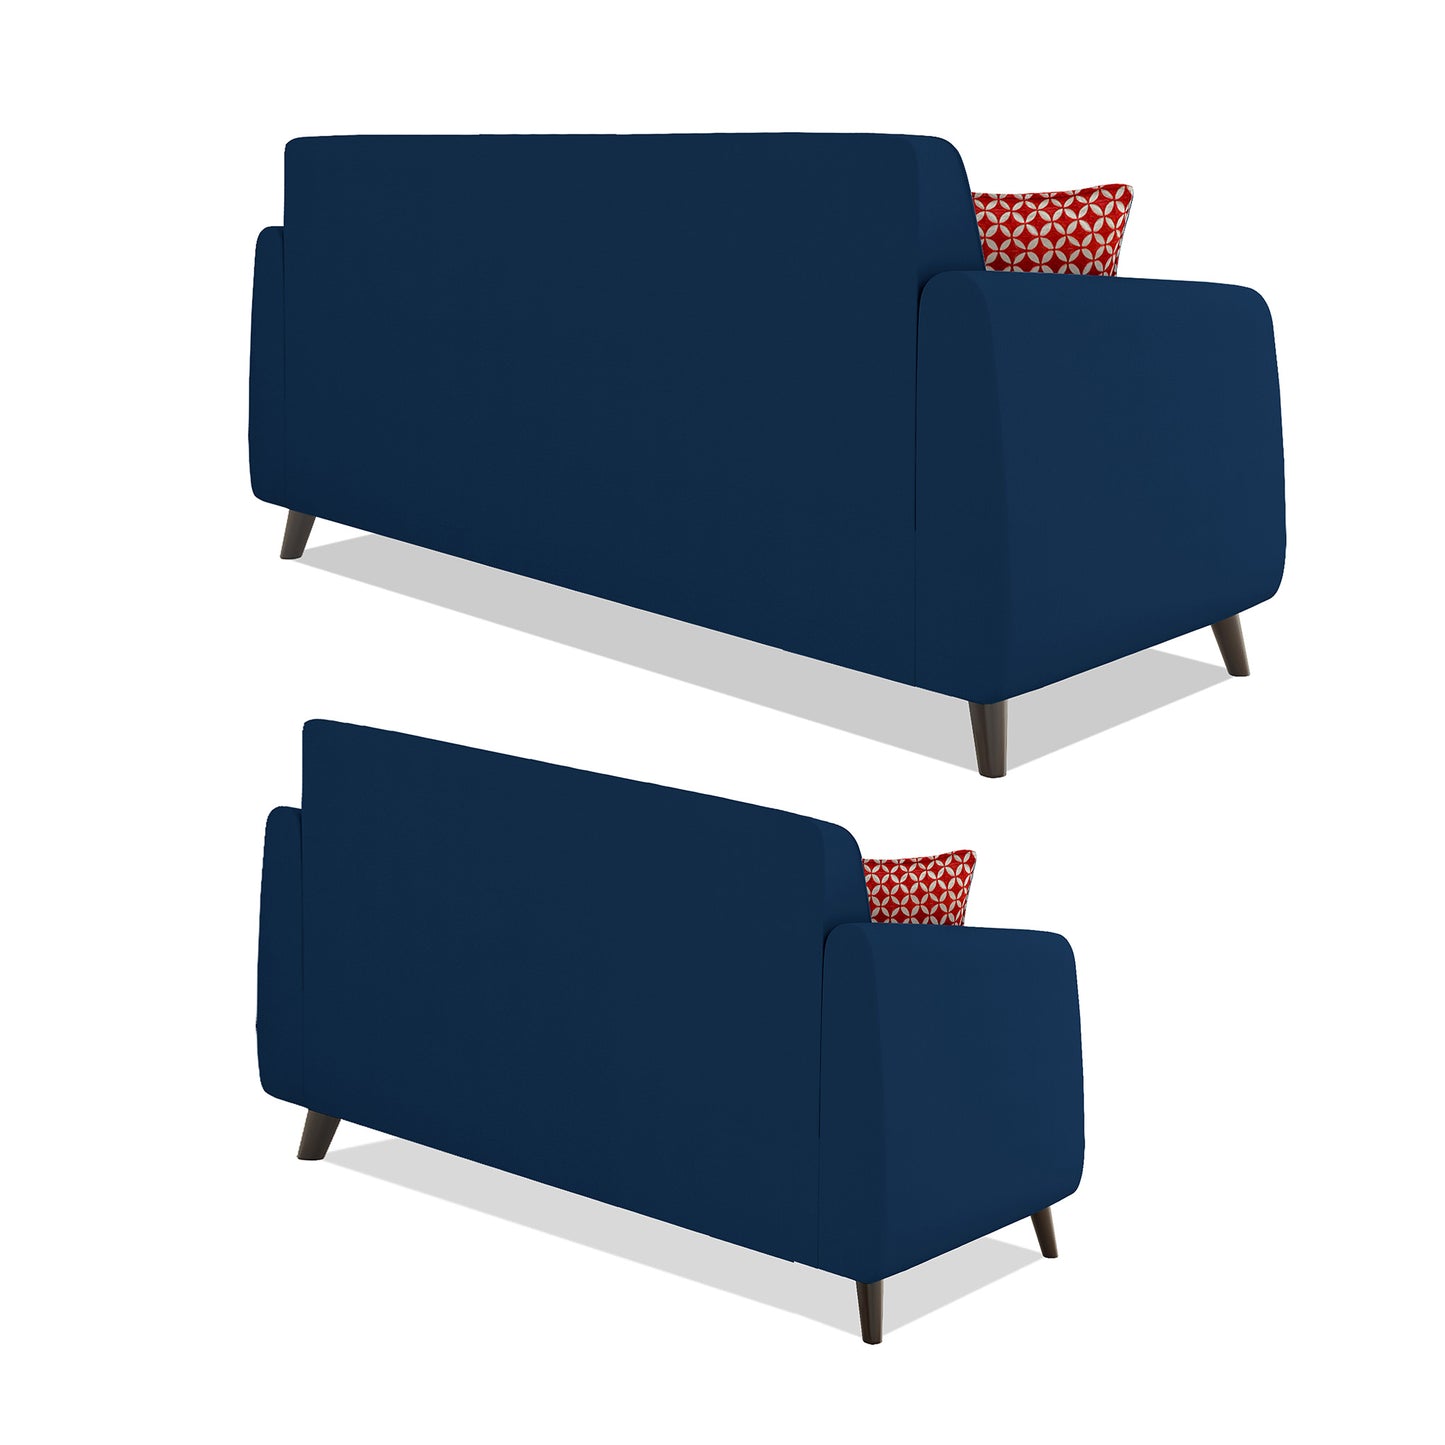 Adorn India Harlem 5 Seater 3+2 Fabric Sofa Set (Blue)